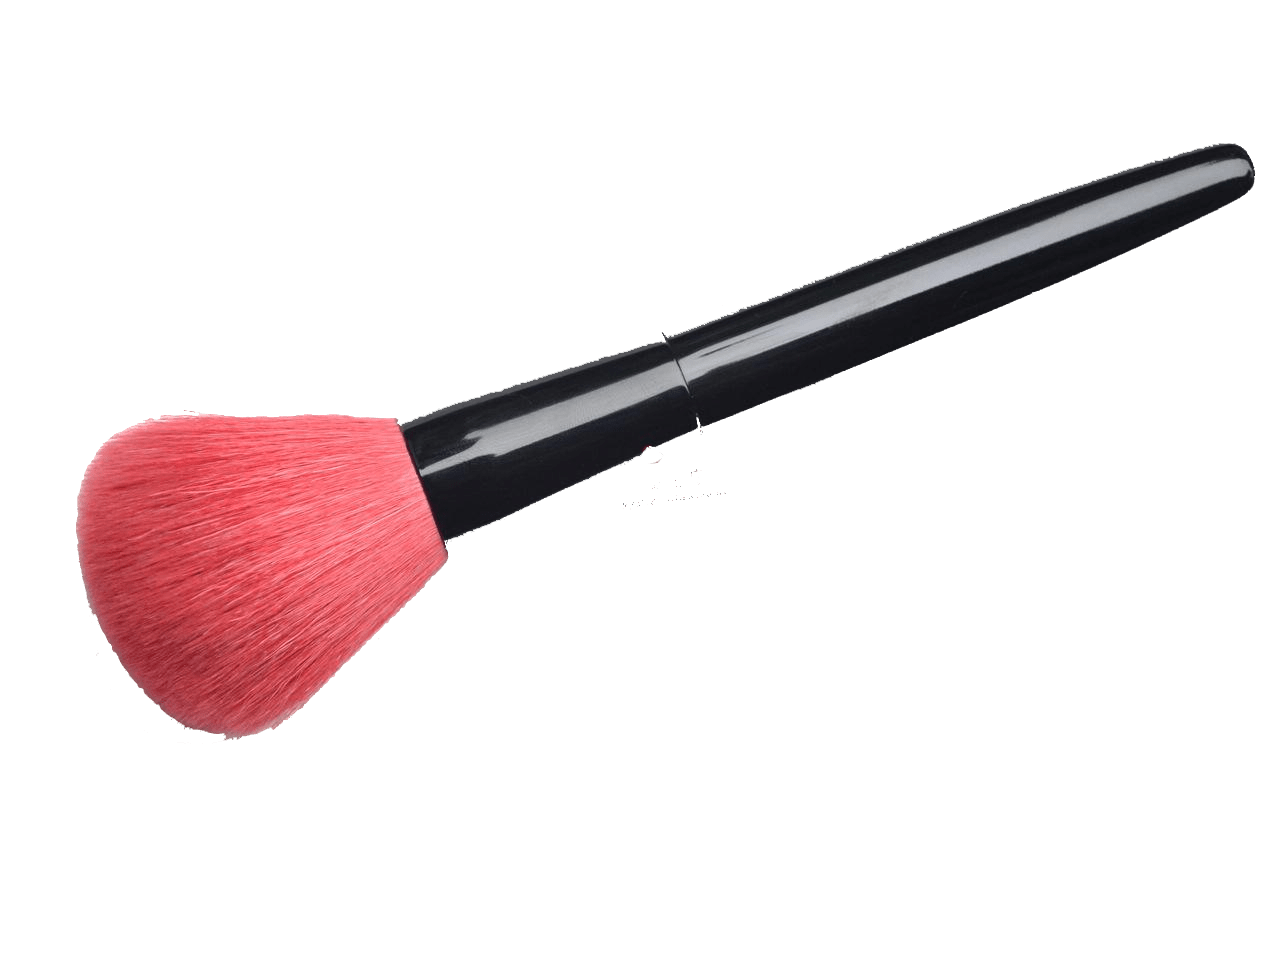 Download PNG image - Makeup Brush PNG Image 